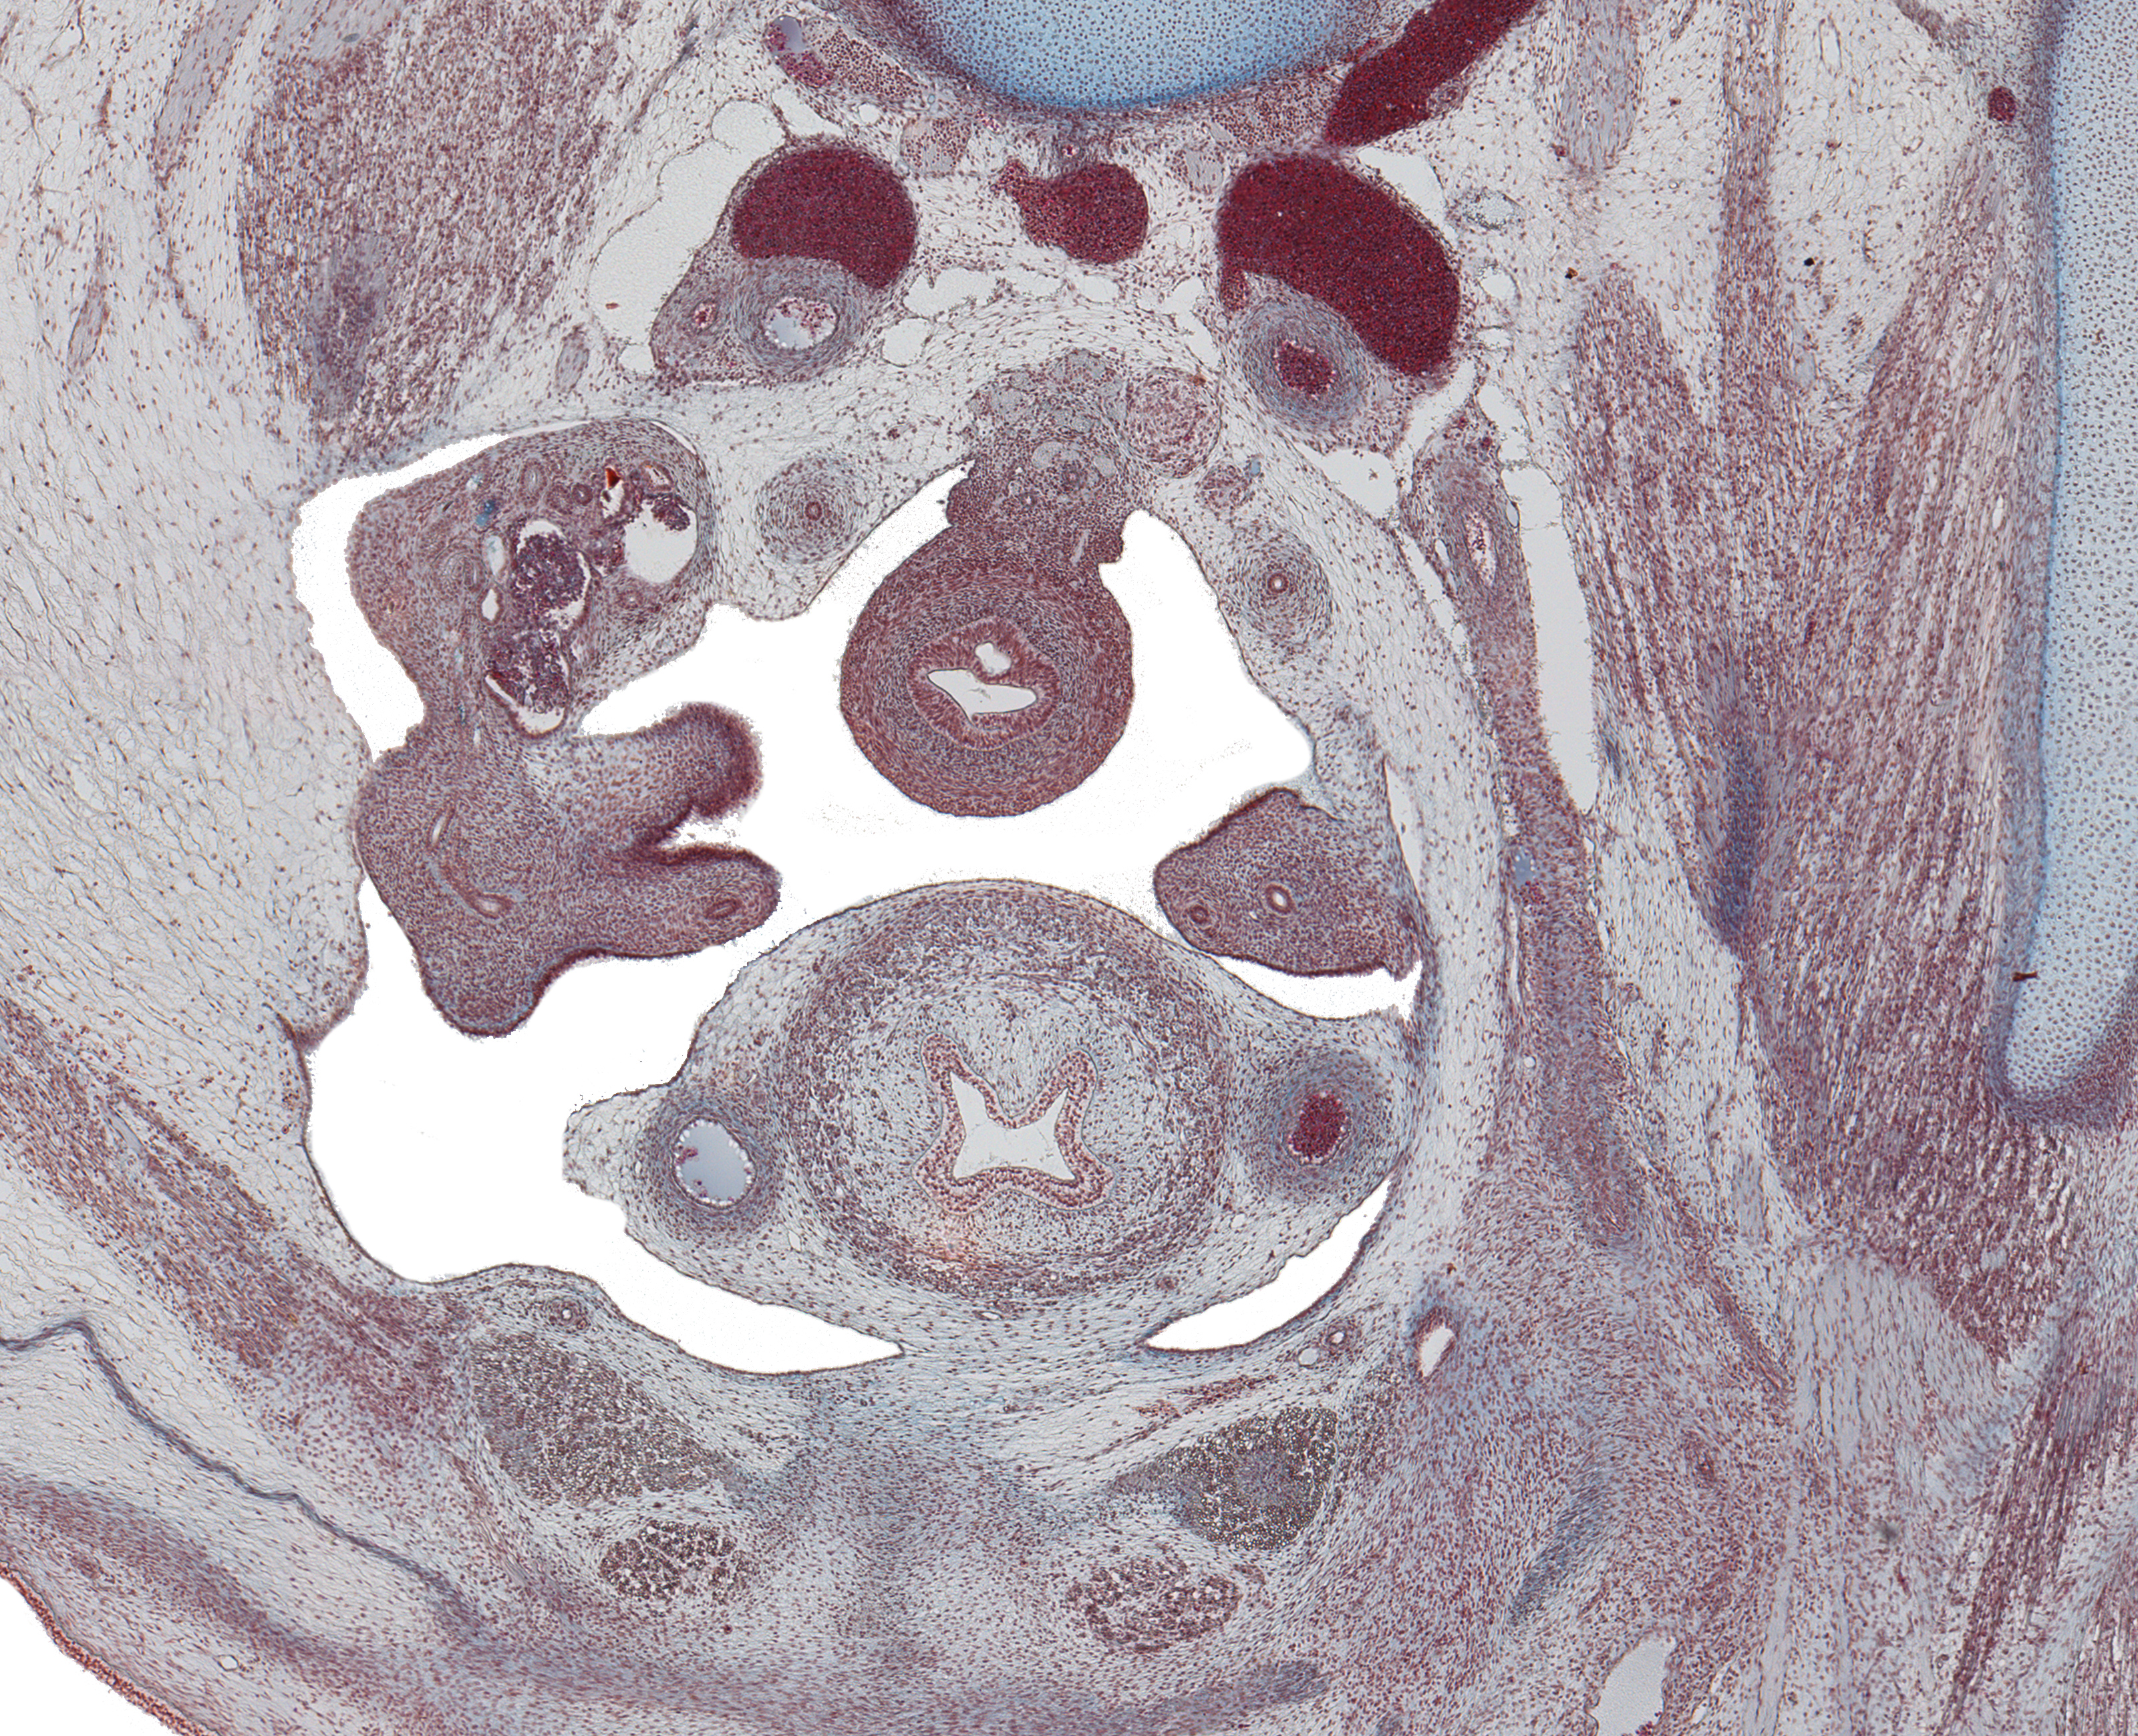 Ureter, Gubernaculum in Inguinal Region and Pubic Symphysis